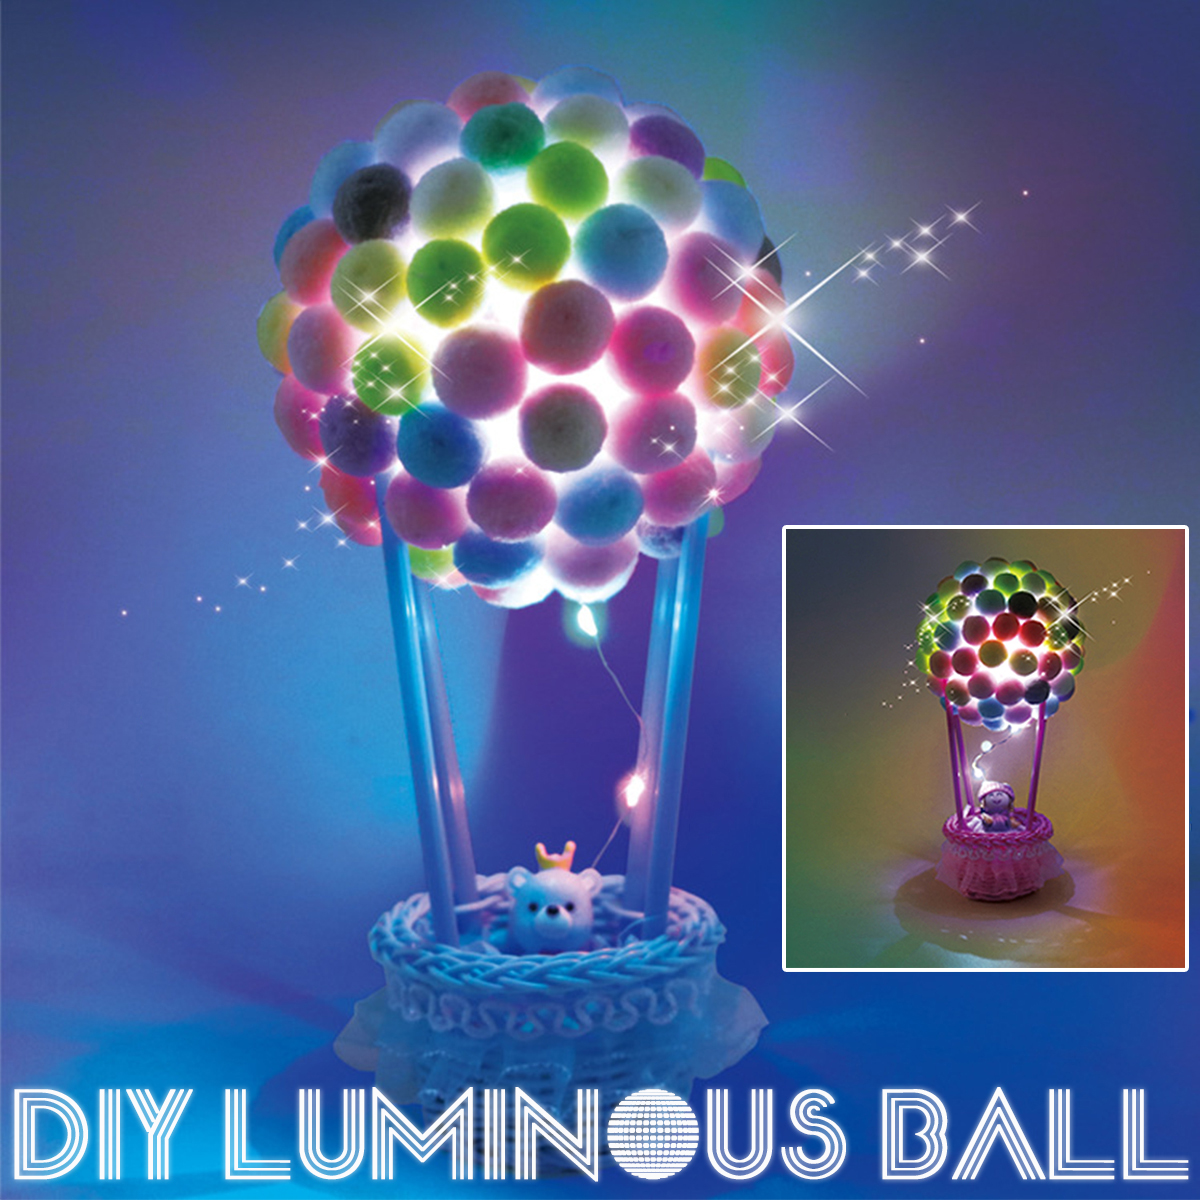 DIY-Luminous-Ball-Lashing-Hot-air-Balloon-Shining-Ornament-Table-Top-Night-Light-1600042-1